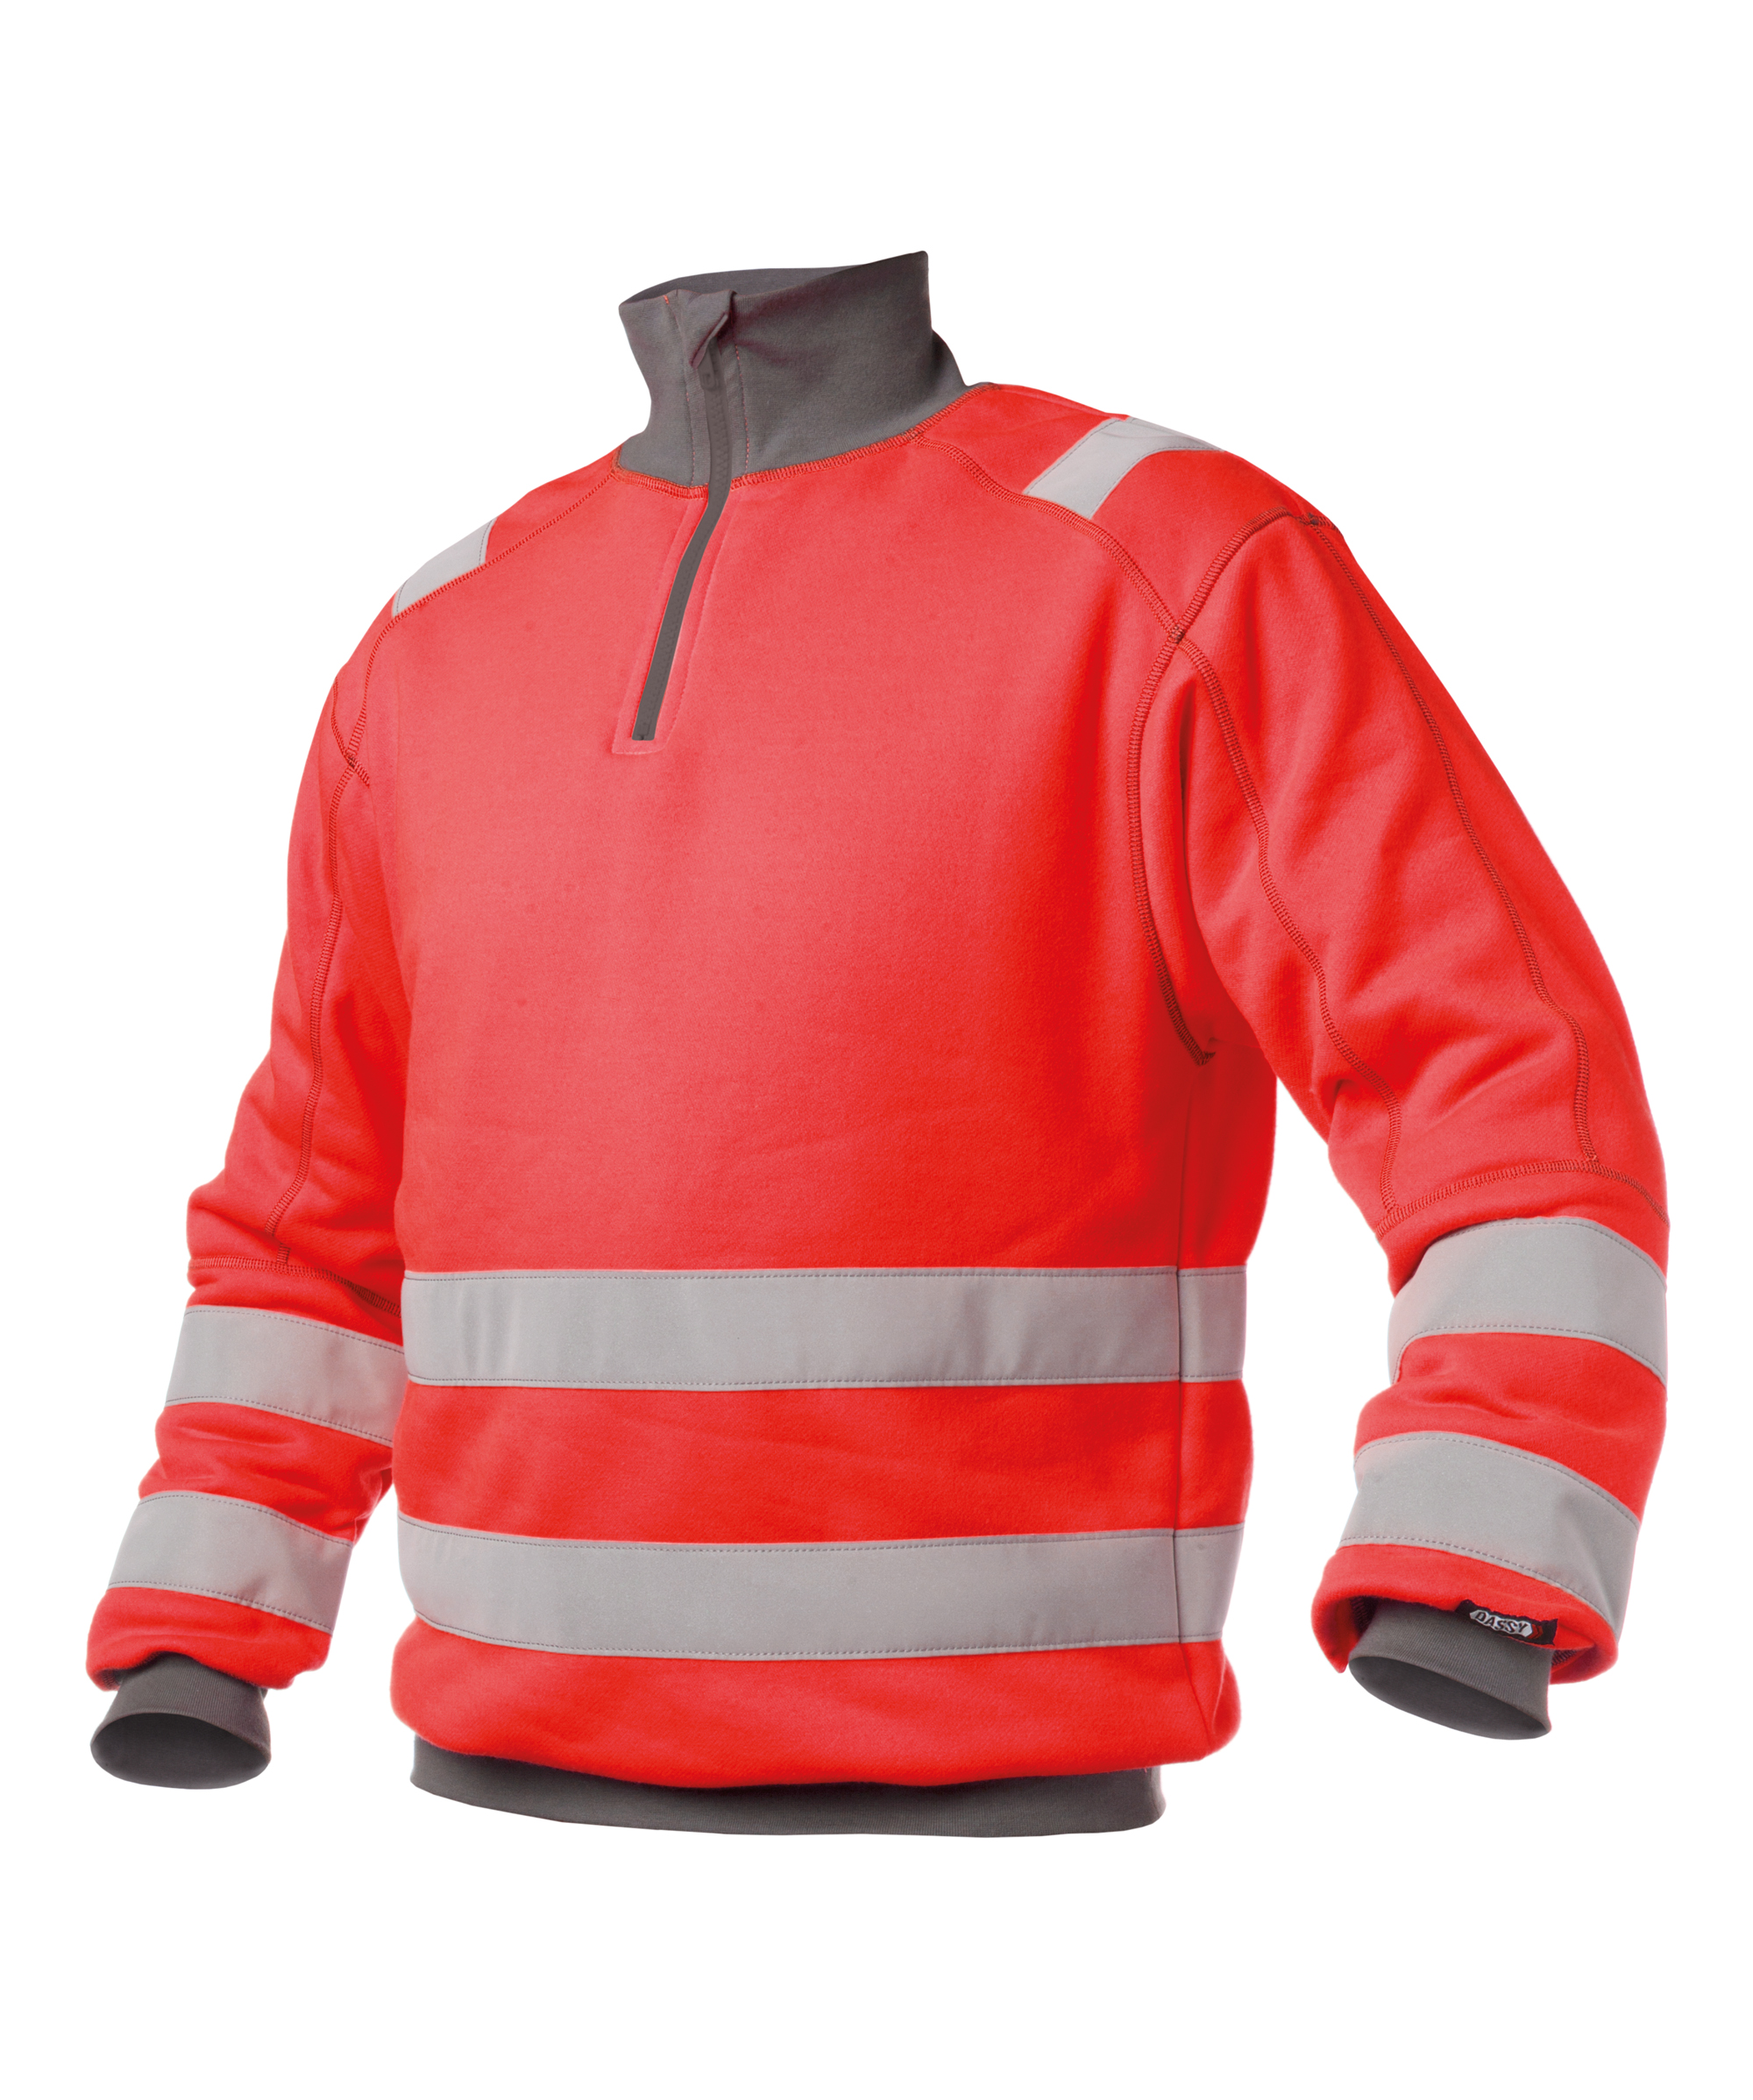 denver_high-visibility-sweatshirt_fluo-red-cement-grey_front.jpg